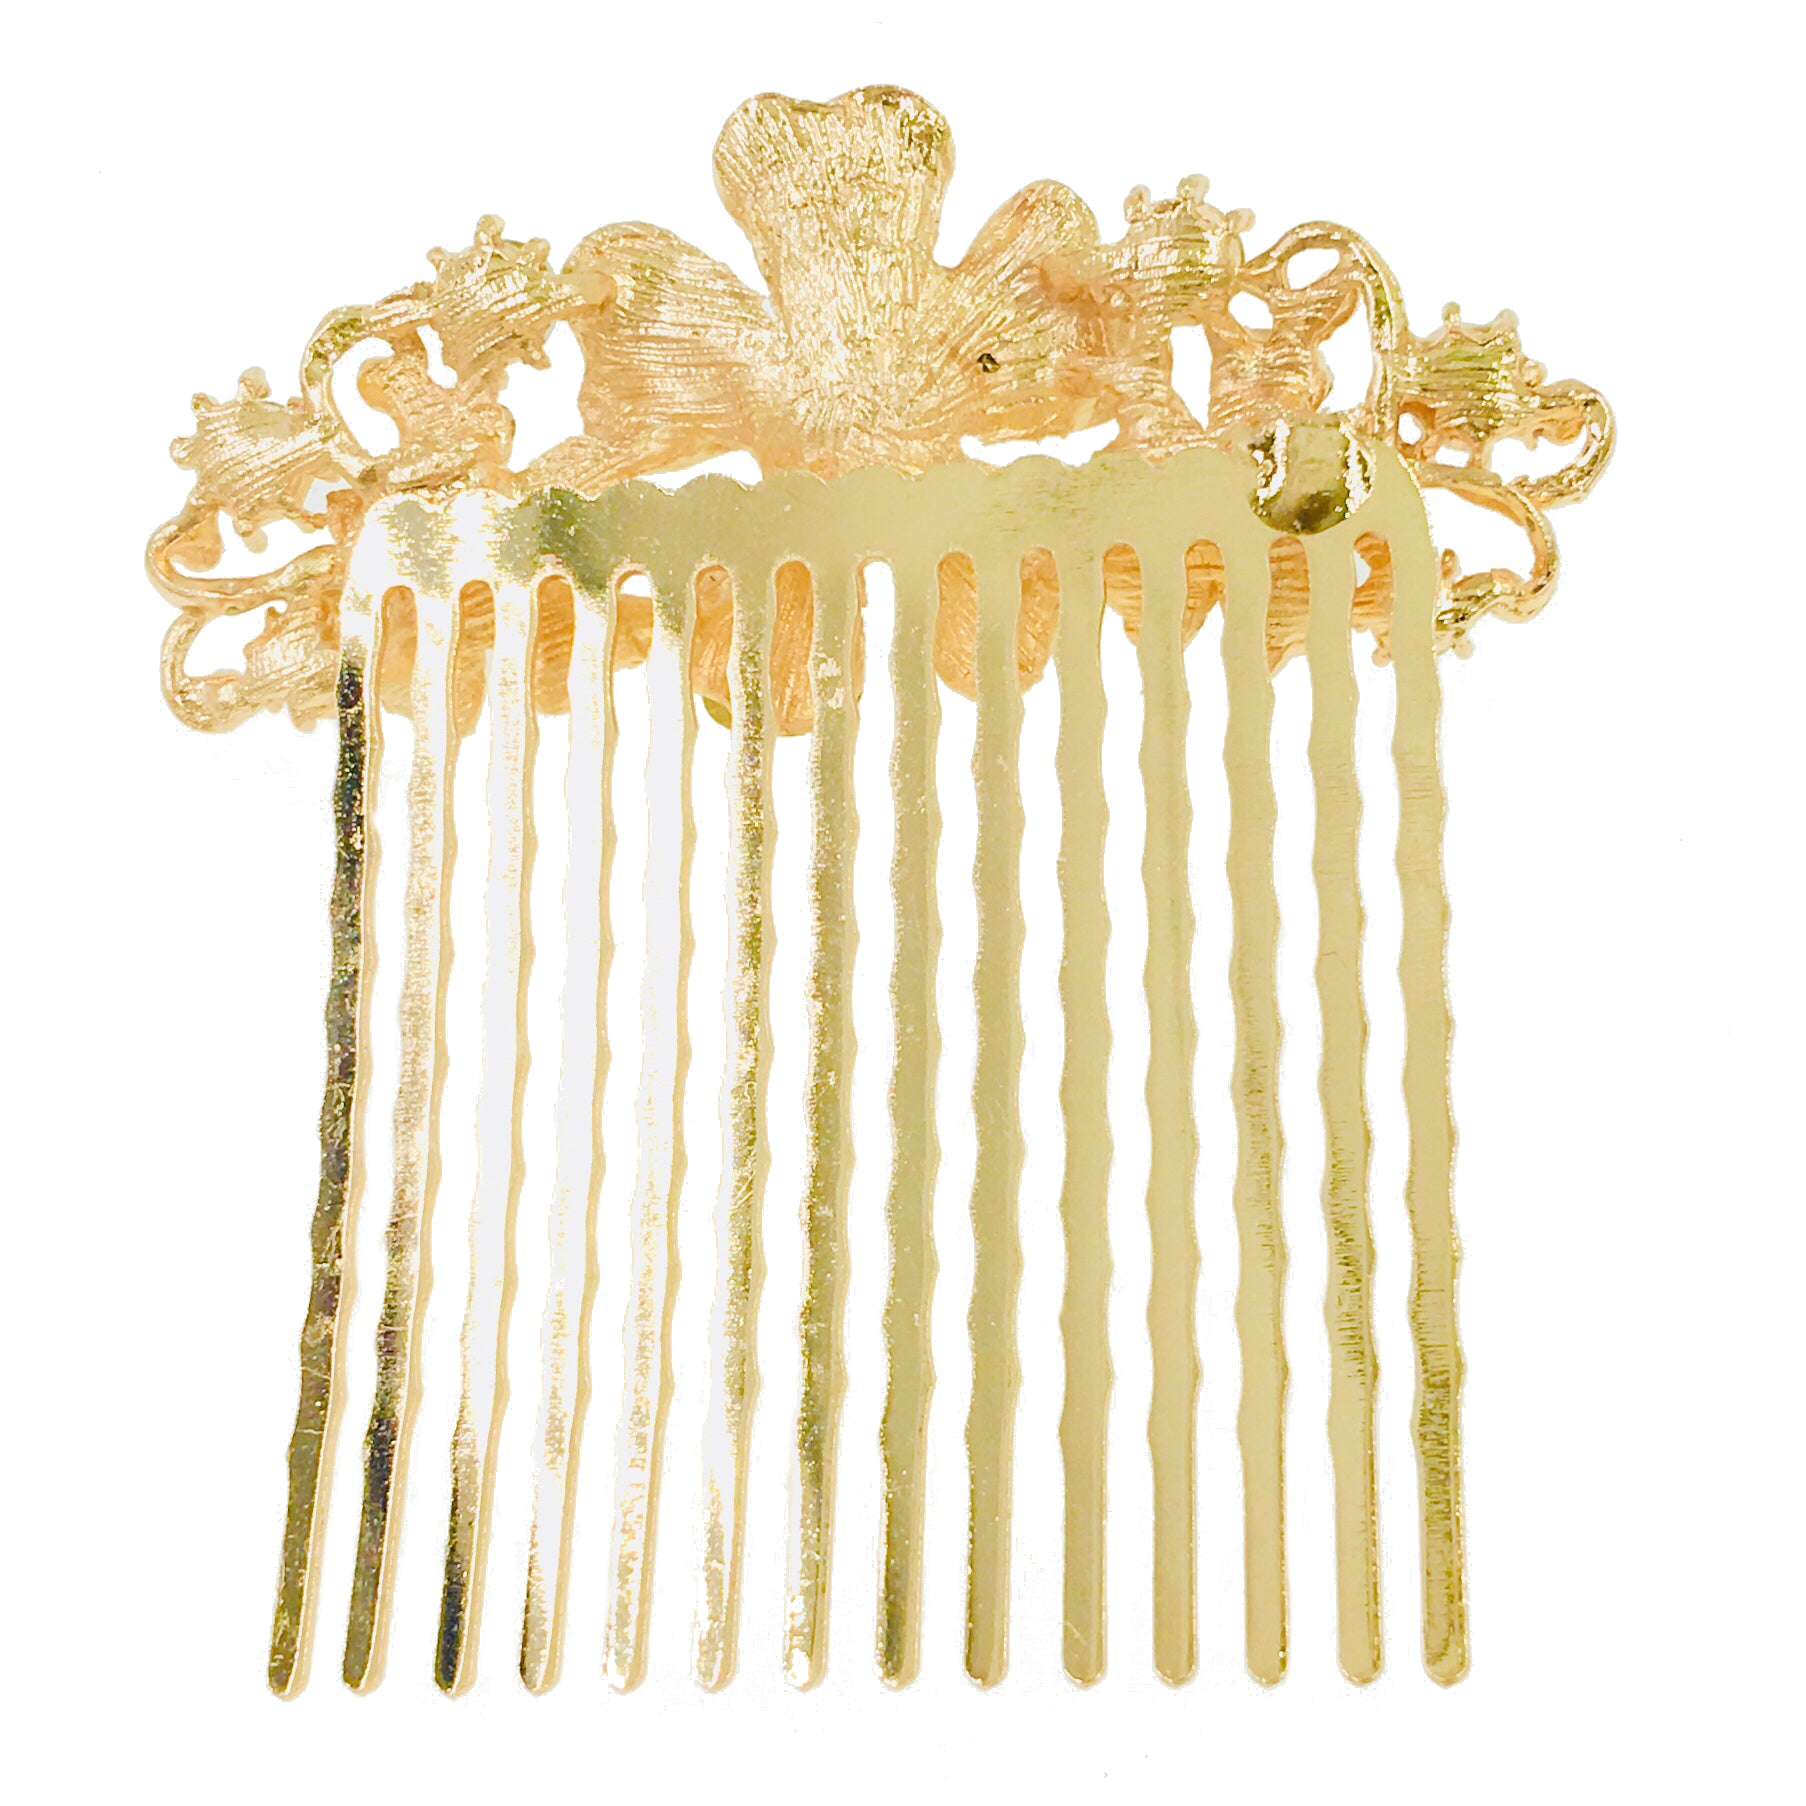 Leadwort Flower Cluster Hair Comb Swarovski Crystal gold base Light Green, Hair Comb - MOGHANT